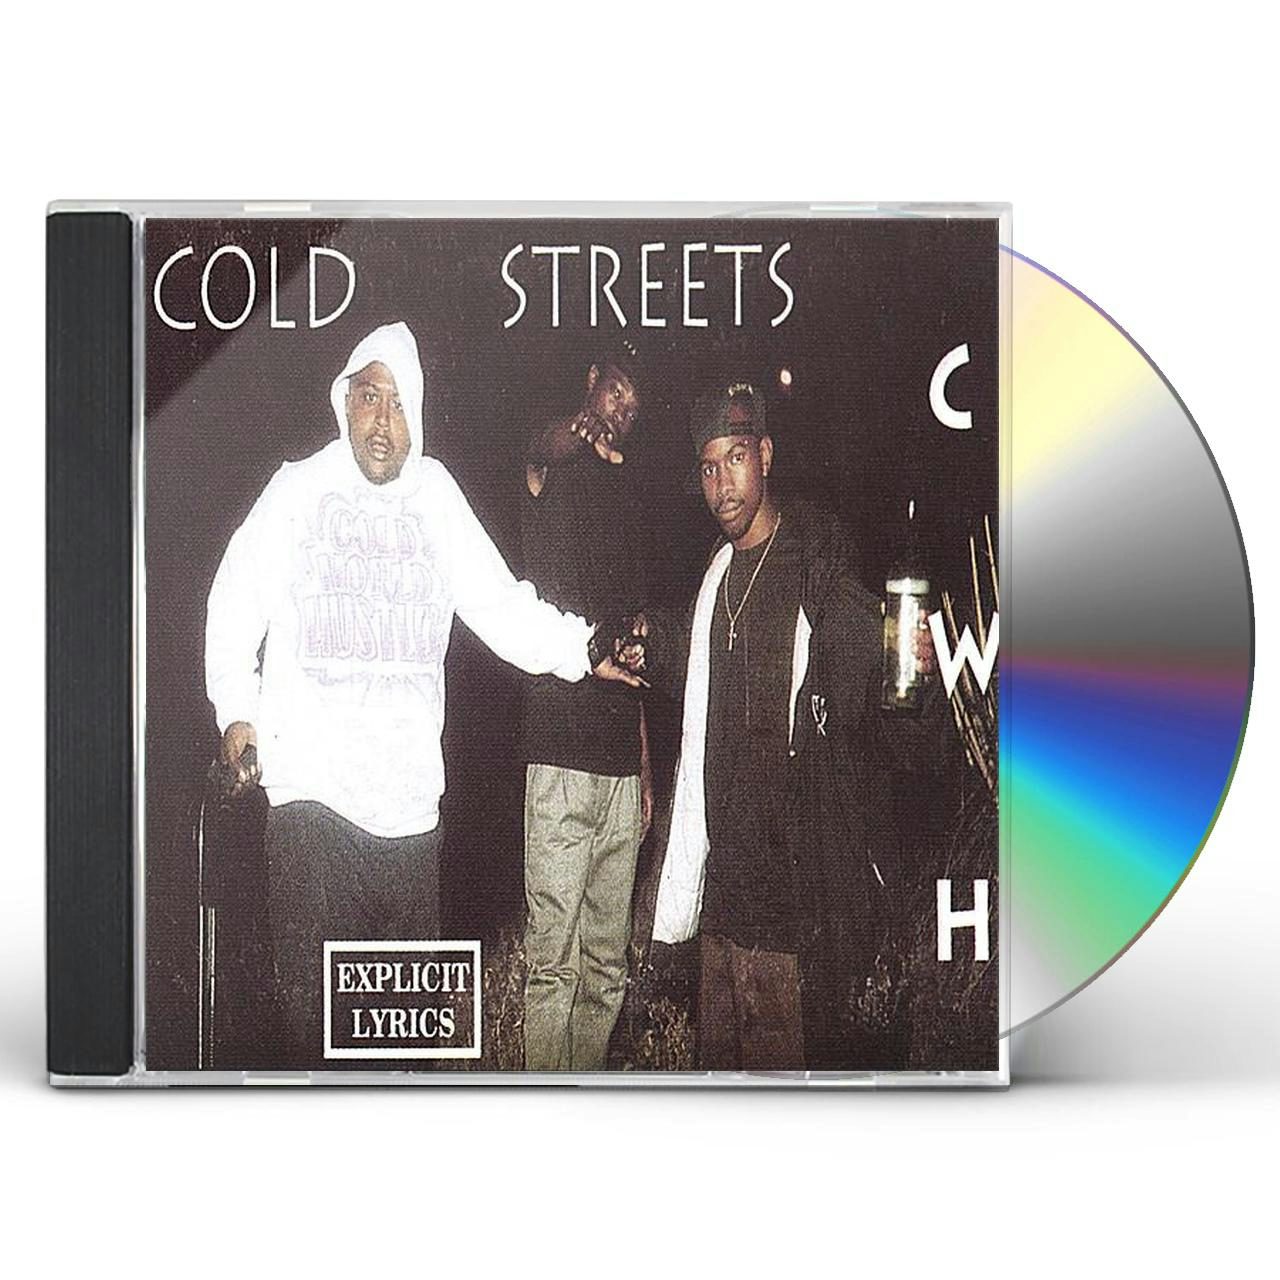 Cold World Hustlers Store: Official Merch & Vinyl